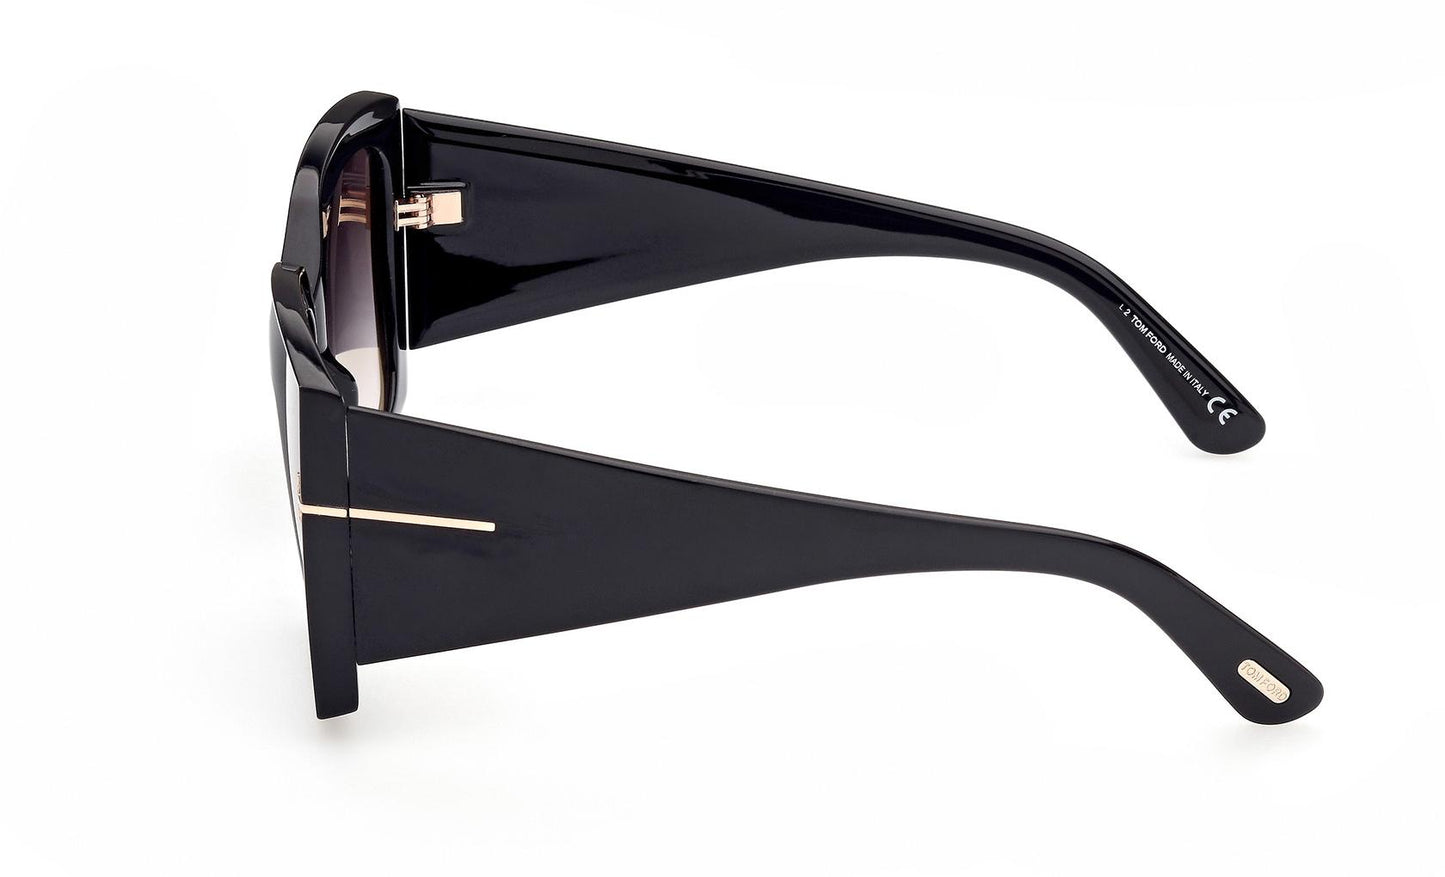 Tom Ford Jacquetta Sunglasses FT0921 01B